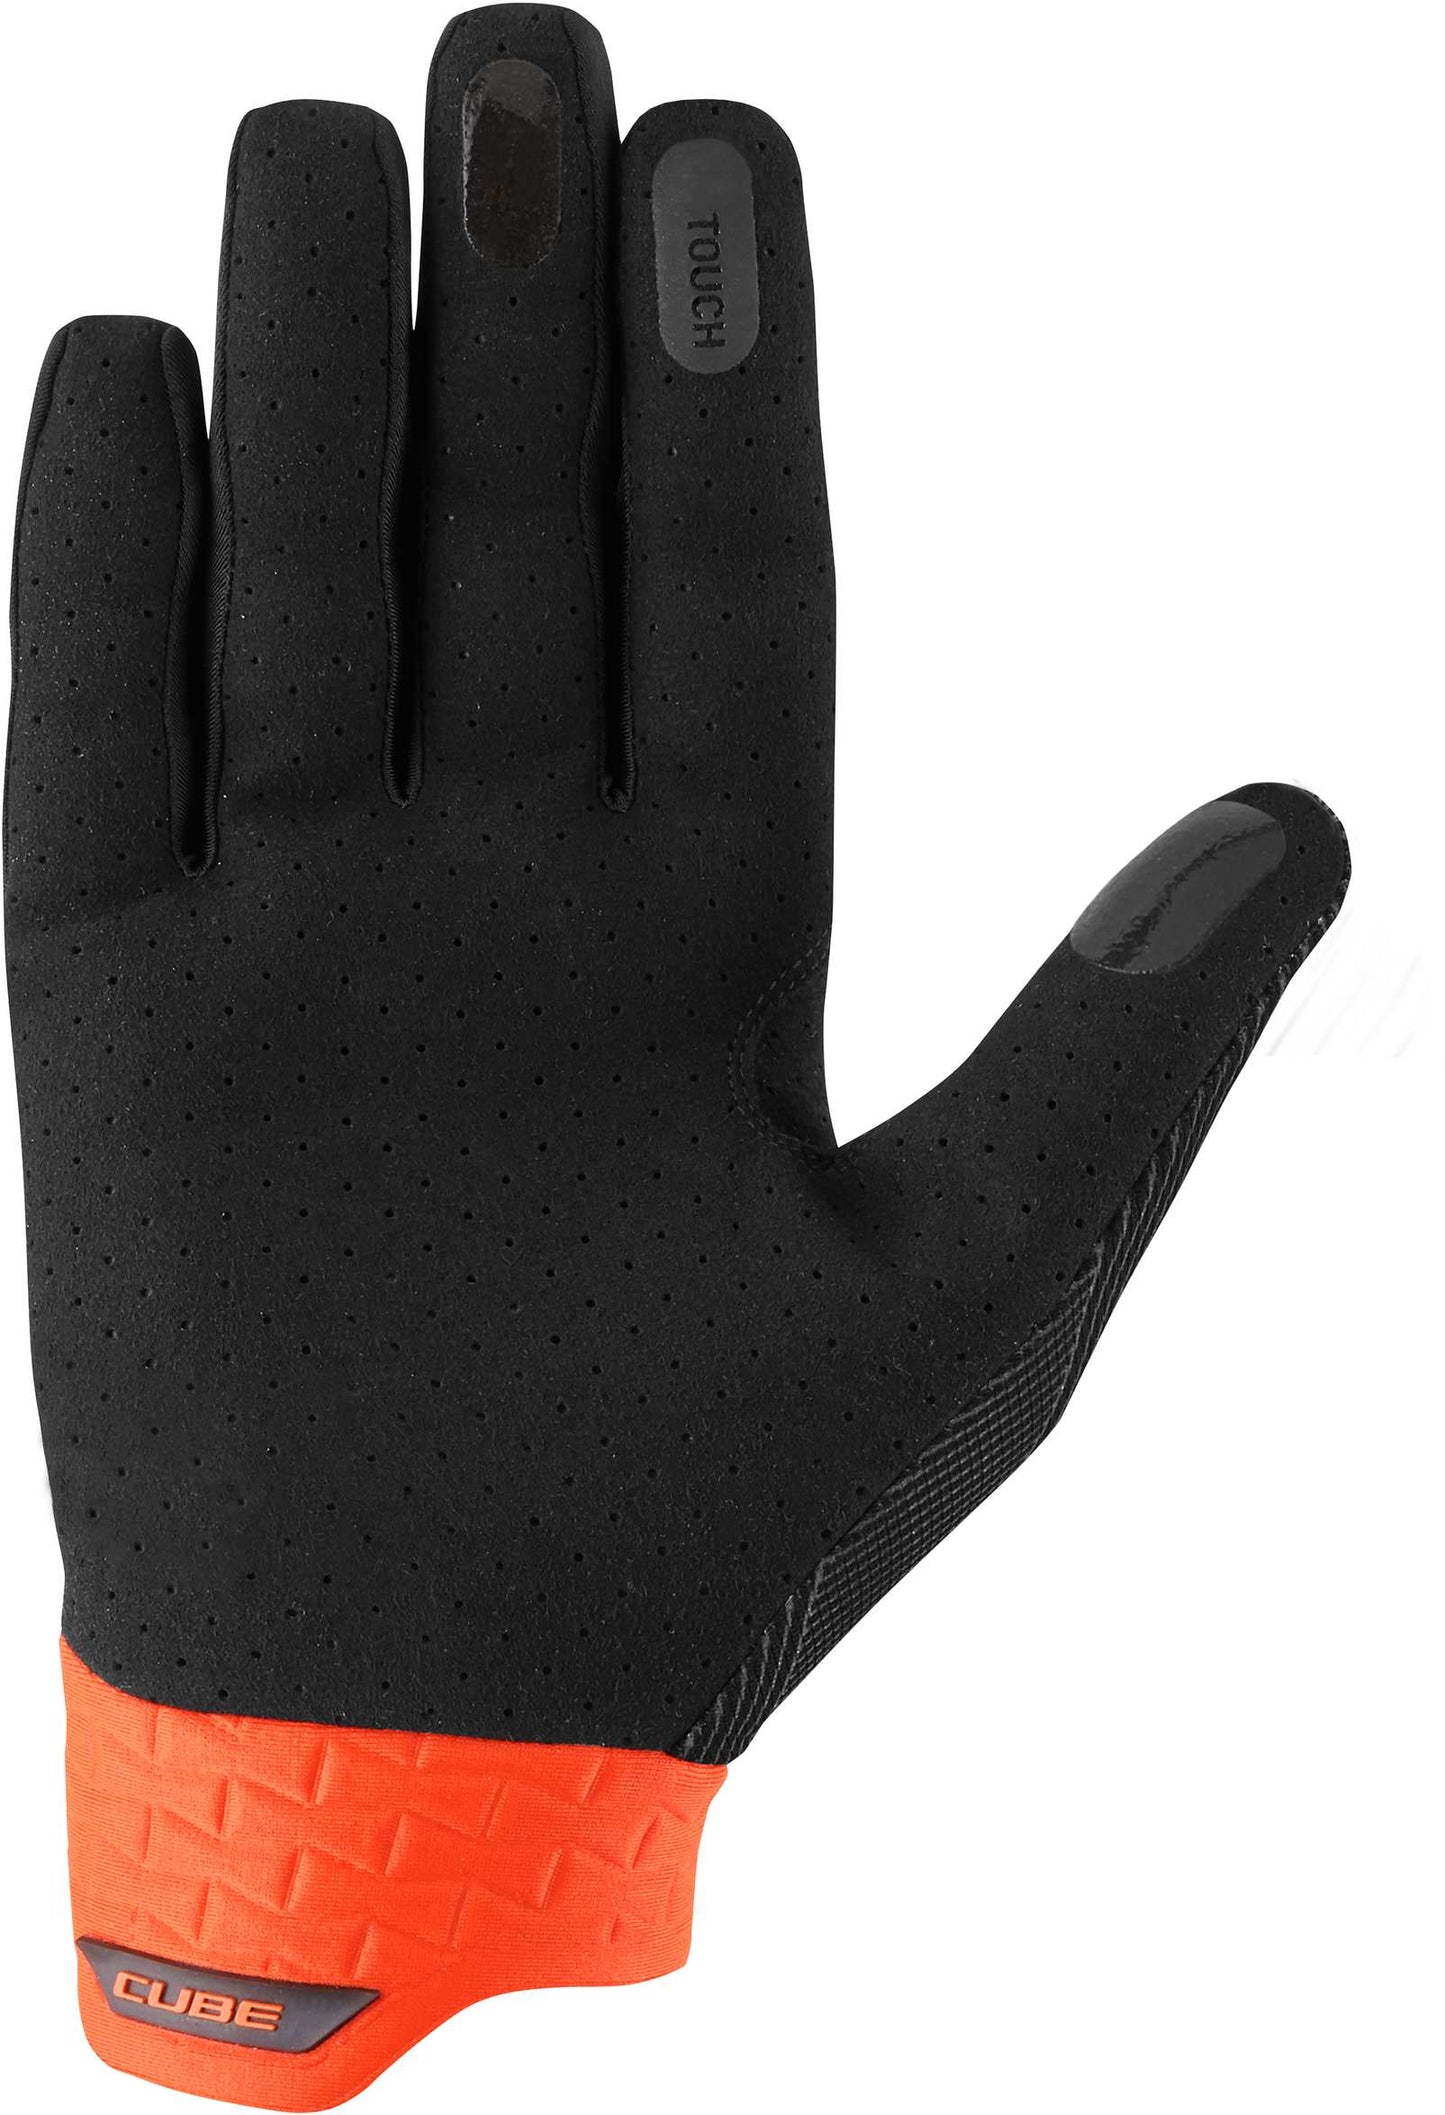 CUBE Gloves Performance Long Finger X Action Team